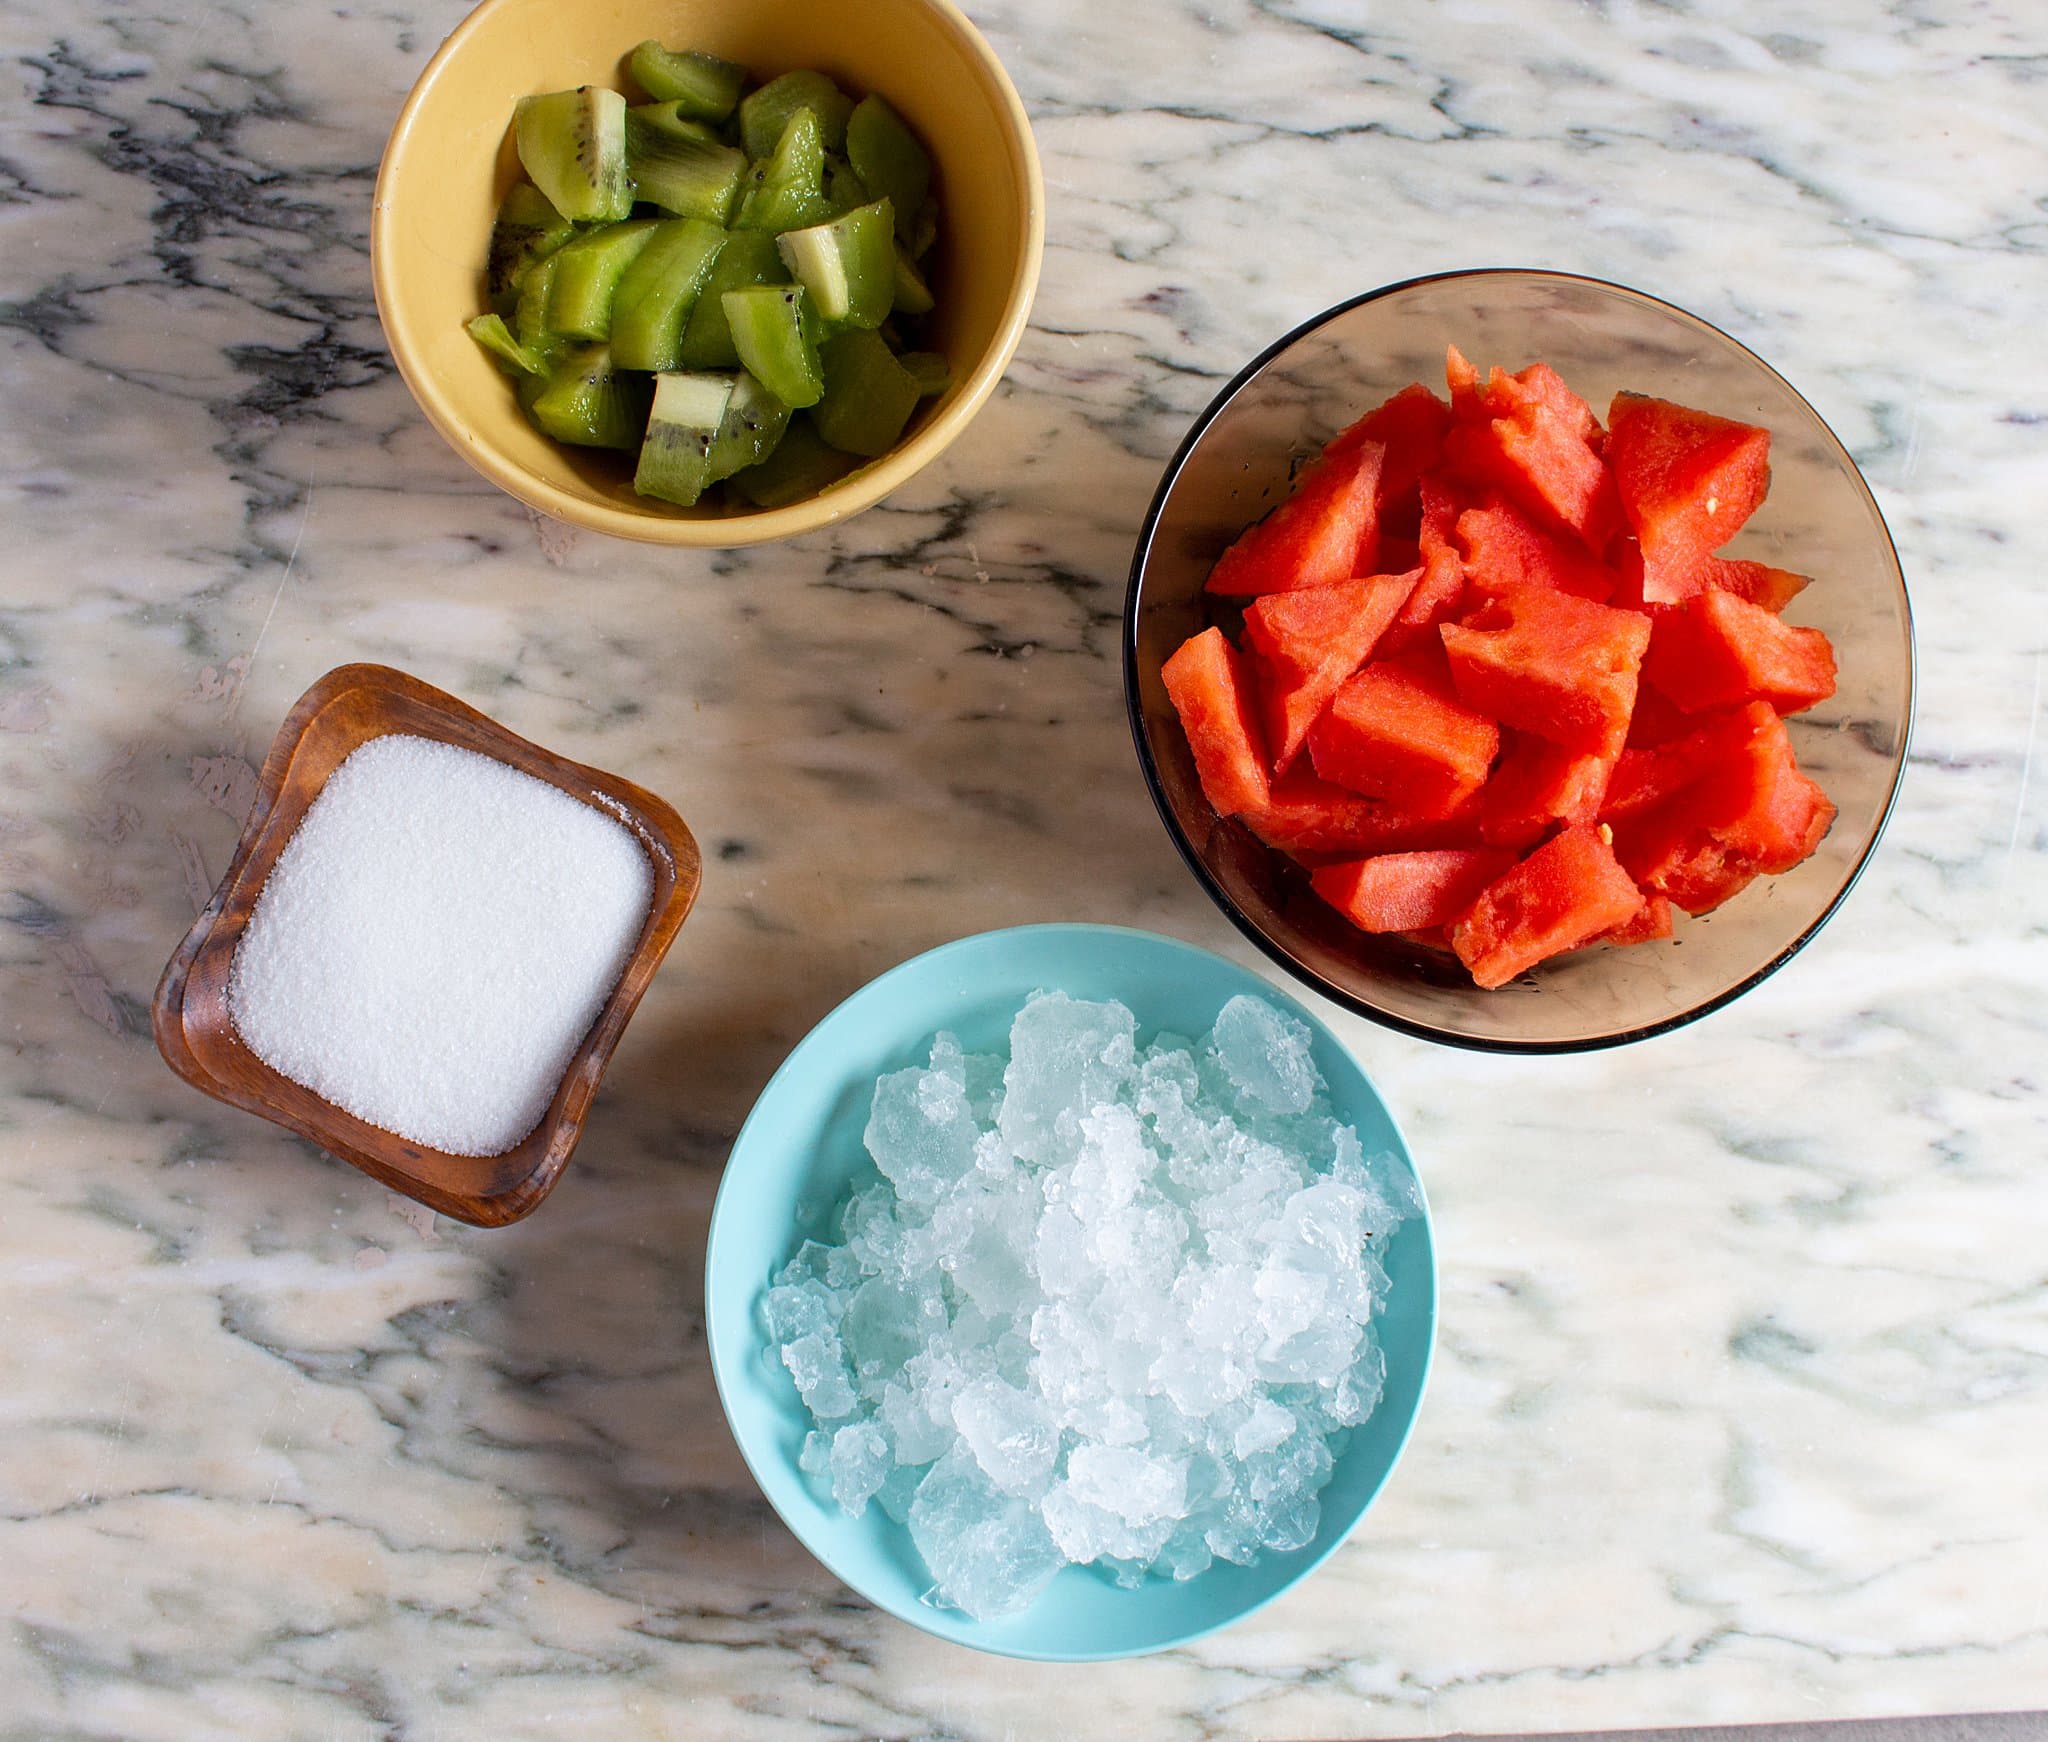 Make the Best Watermelon Kiwi Mocktail